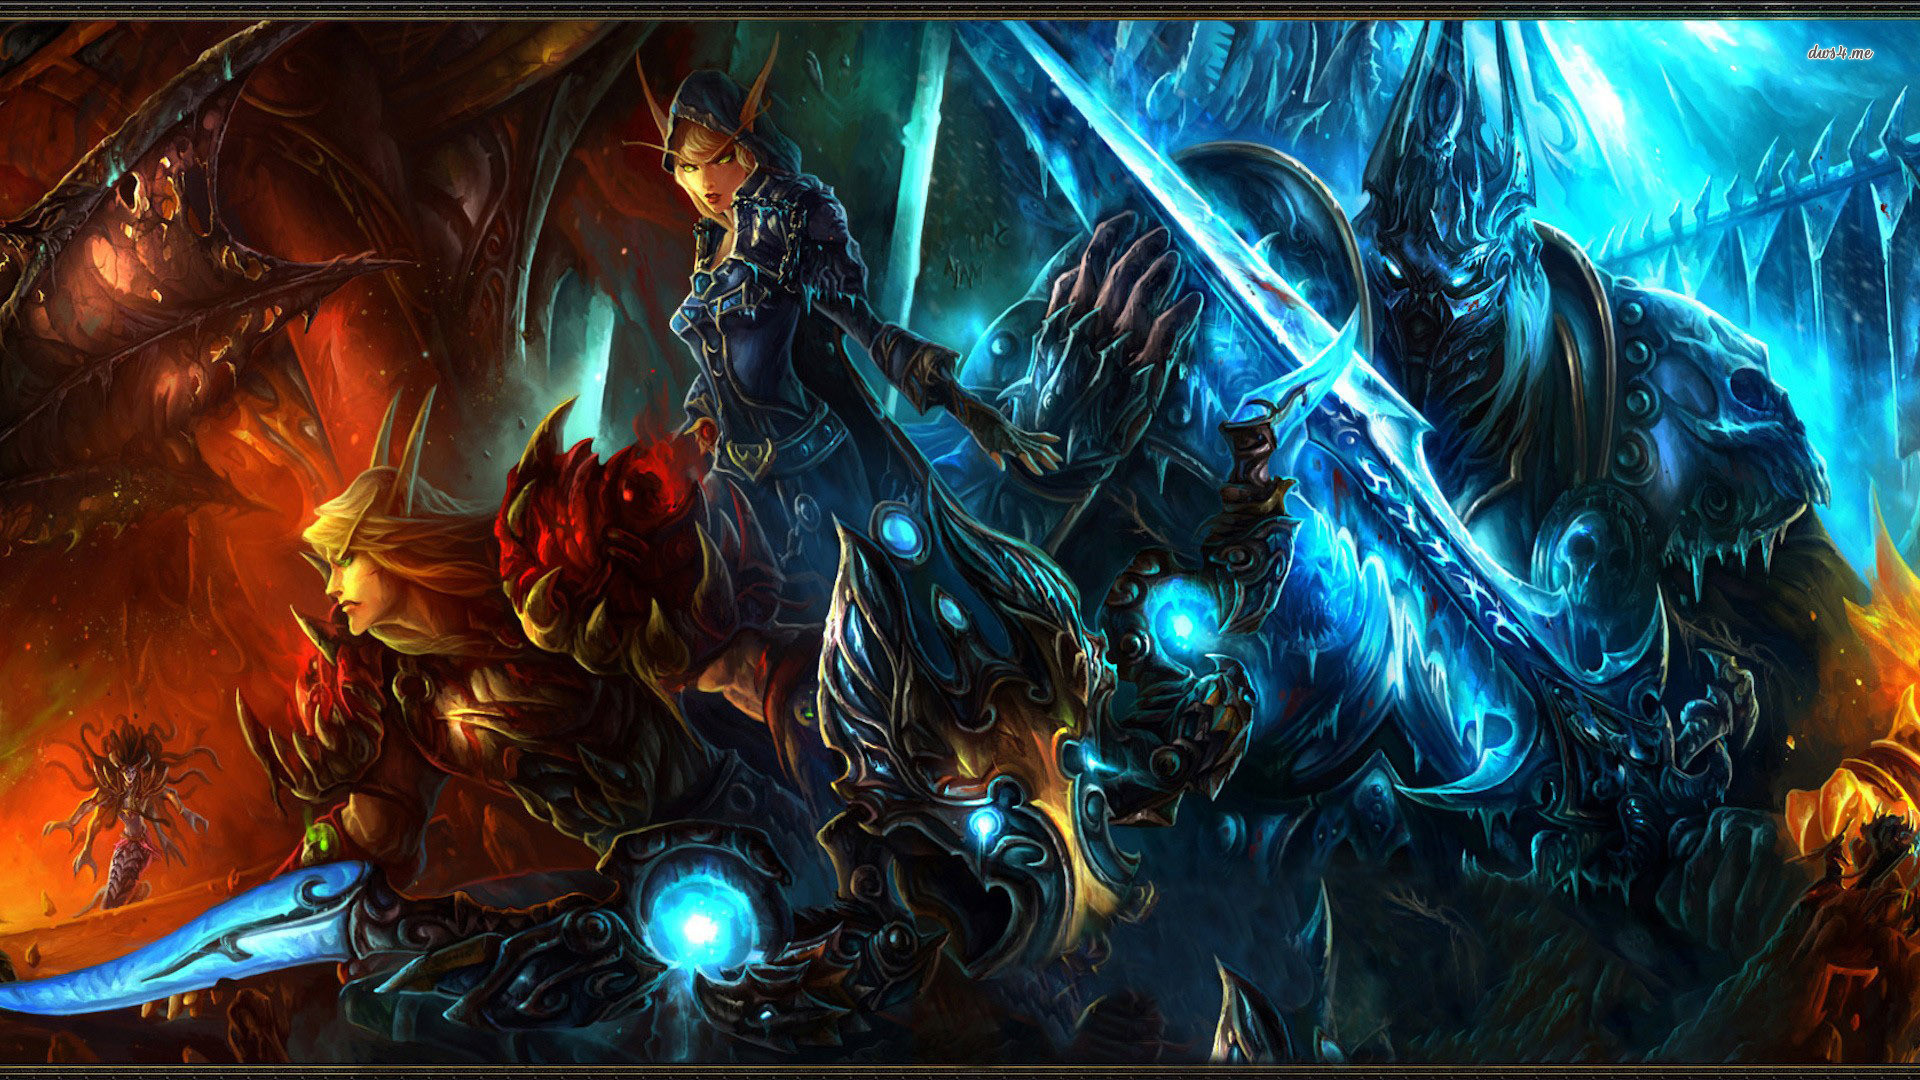 World Of Warcraft Wallpaper Hd Paladin Images